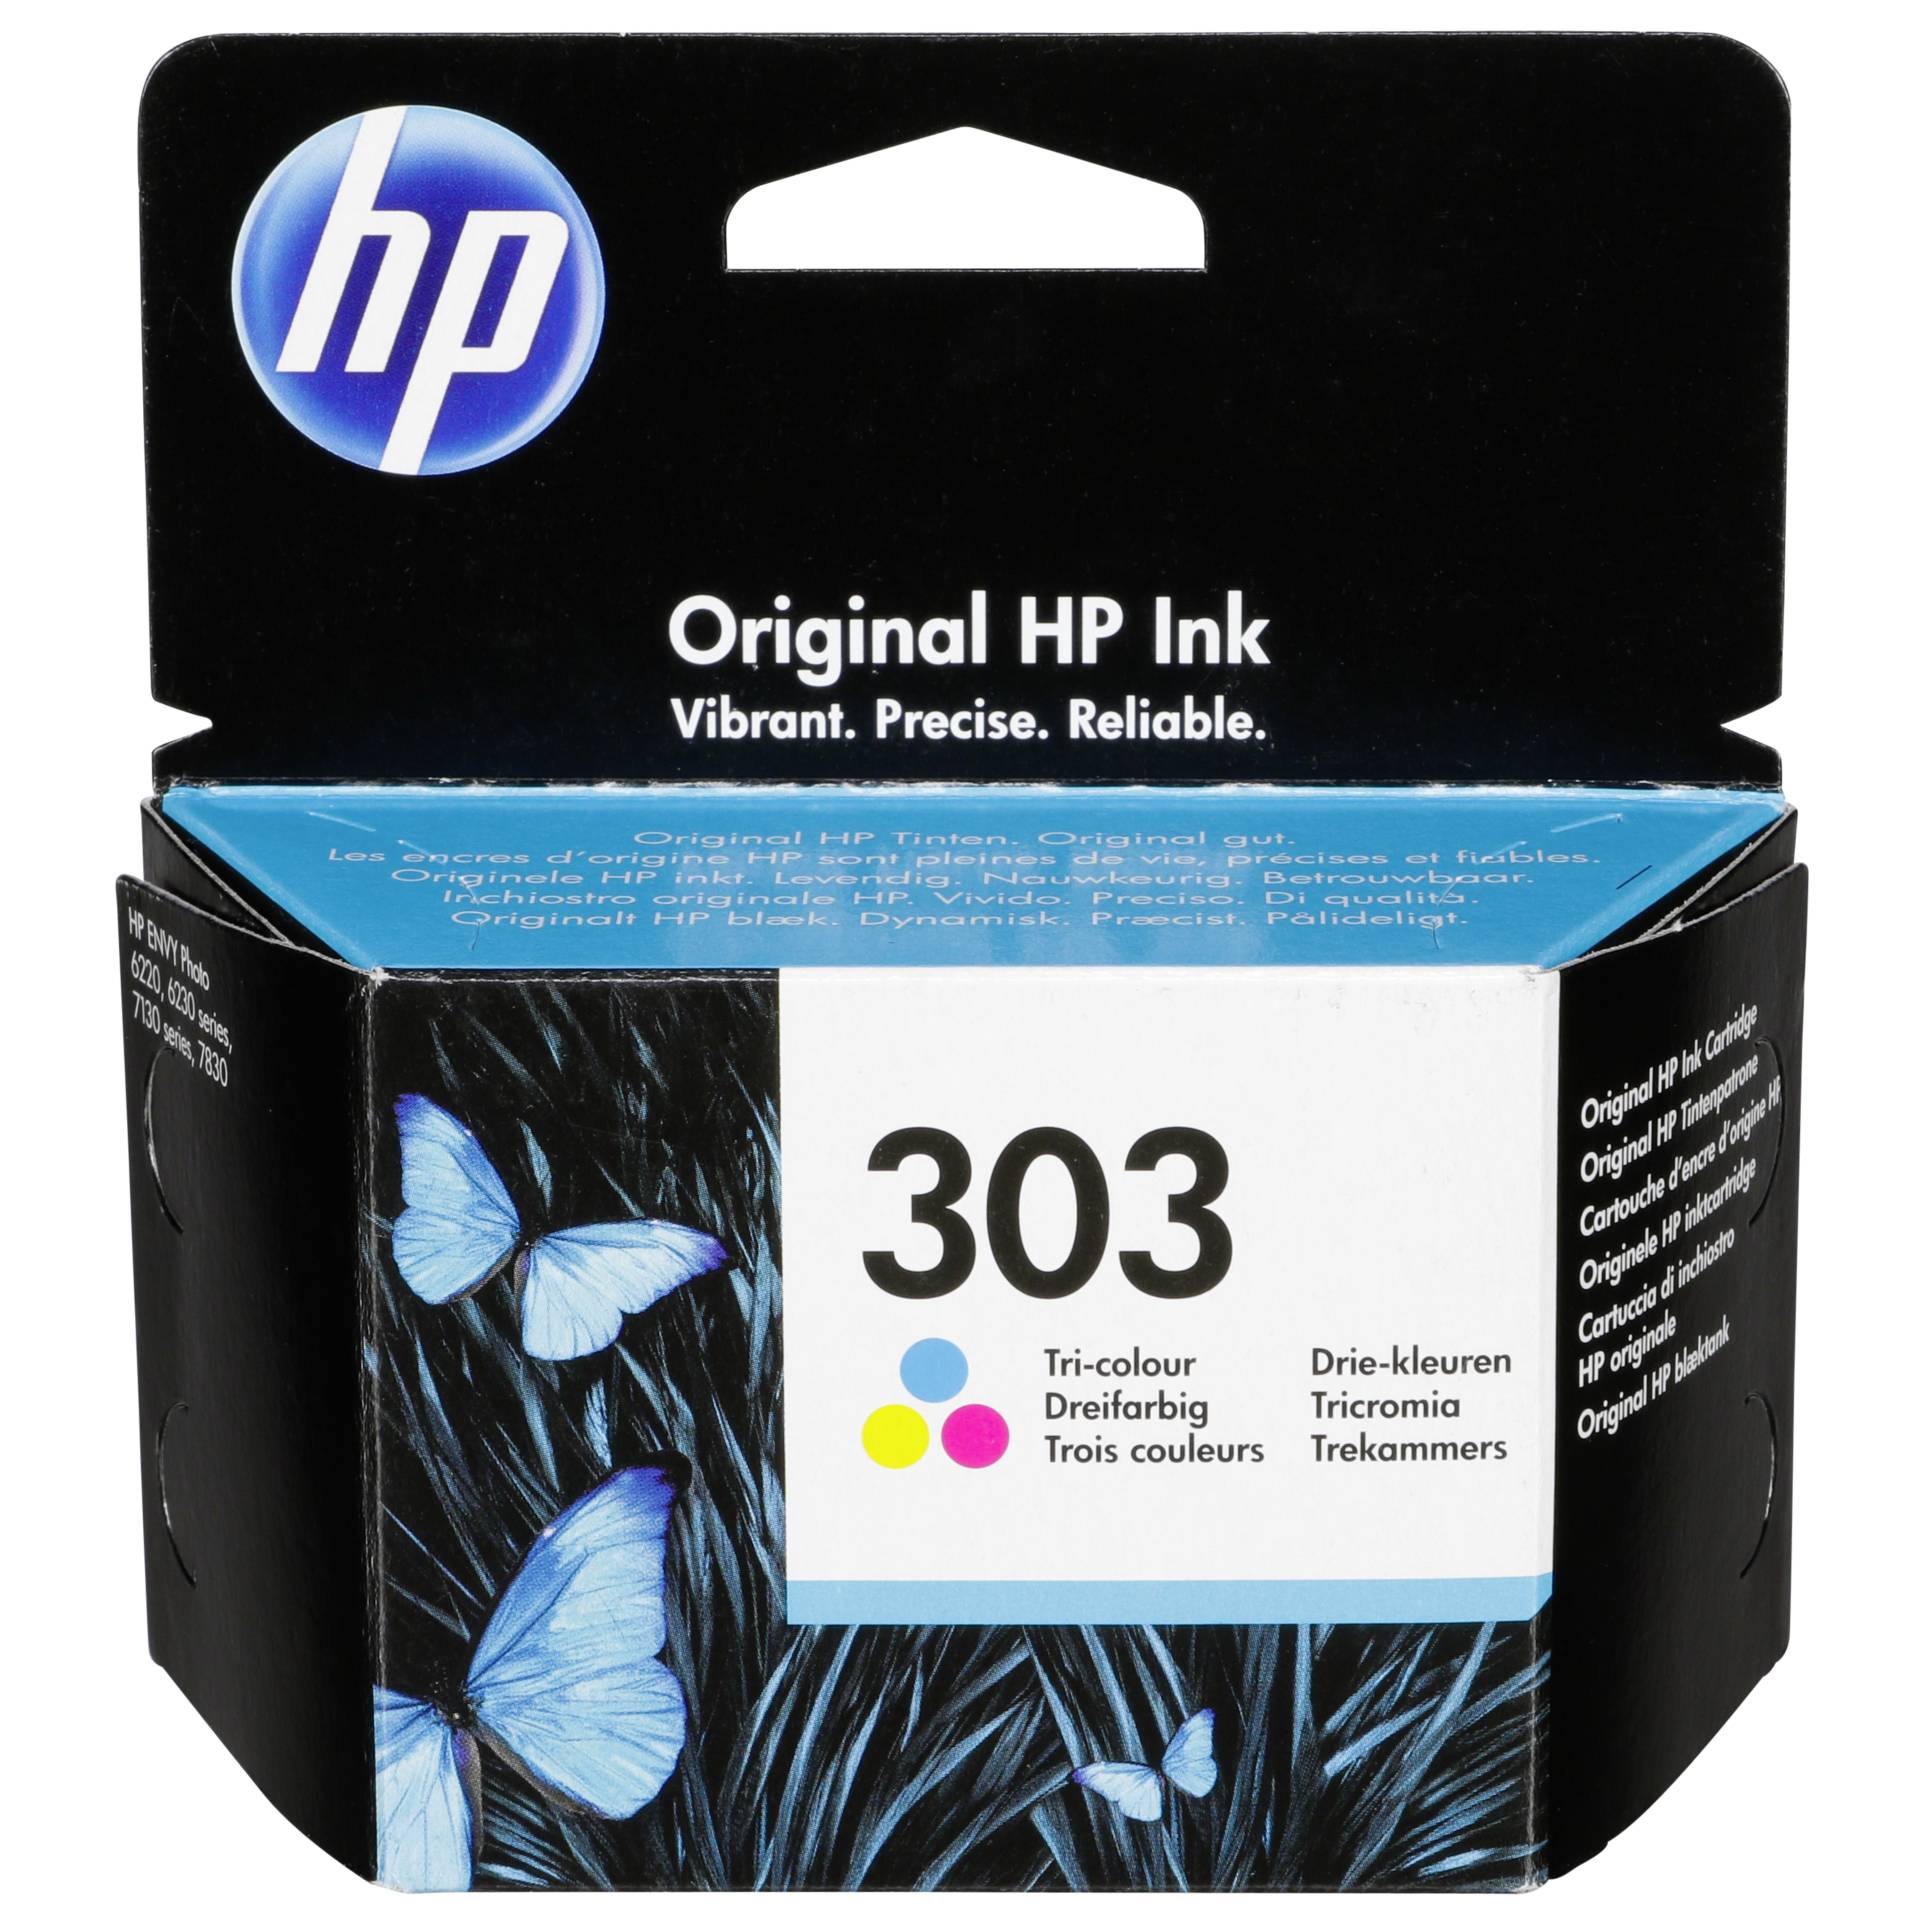 HP Druckkopf mit Tinte 303 dreifarbig 